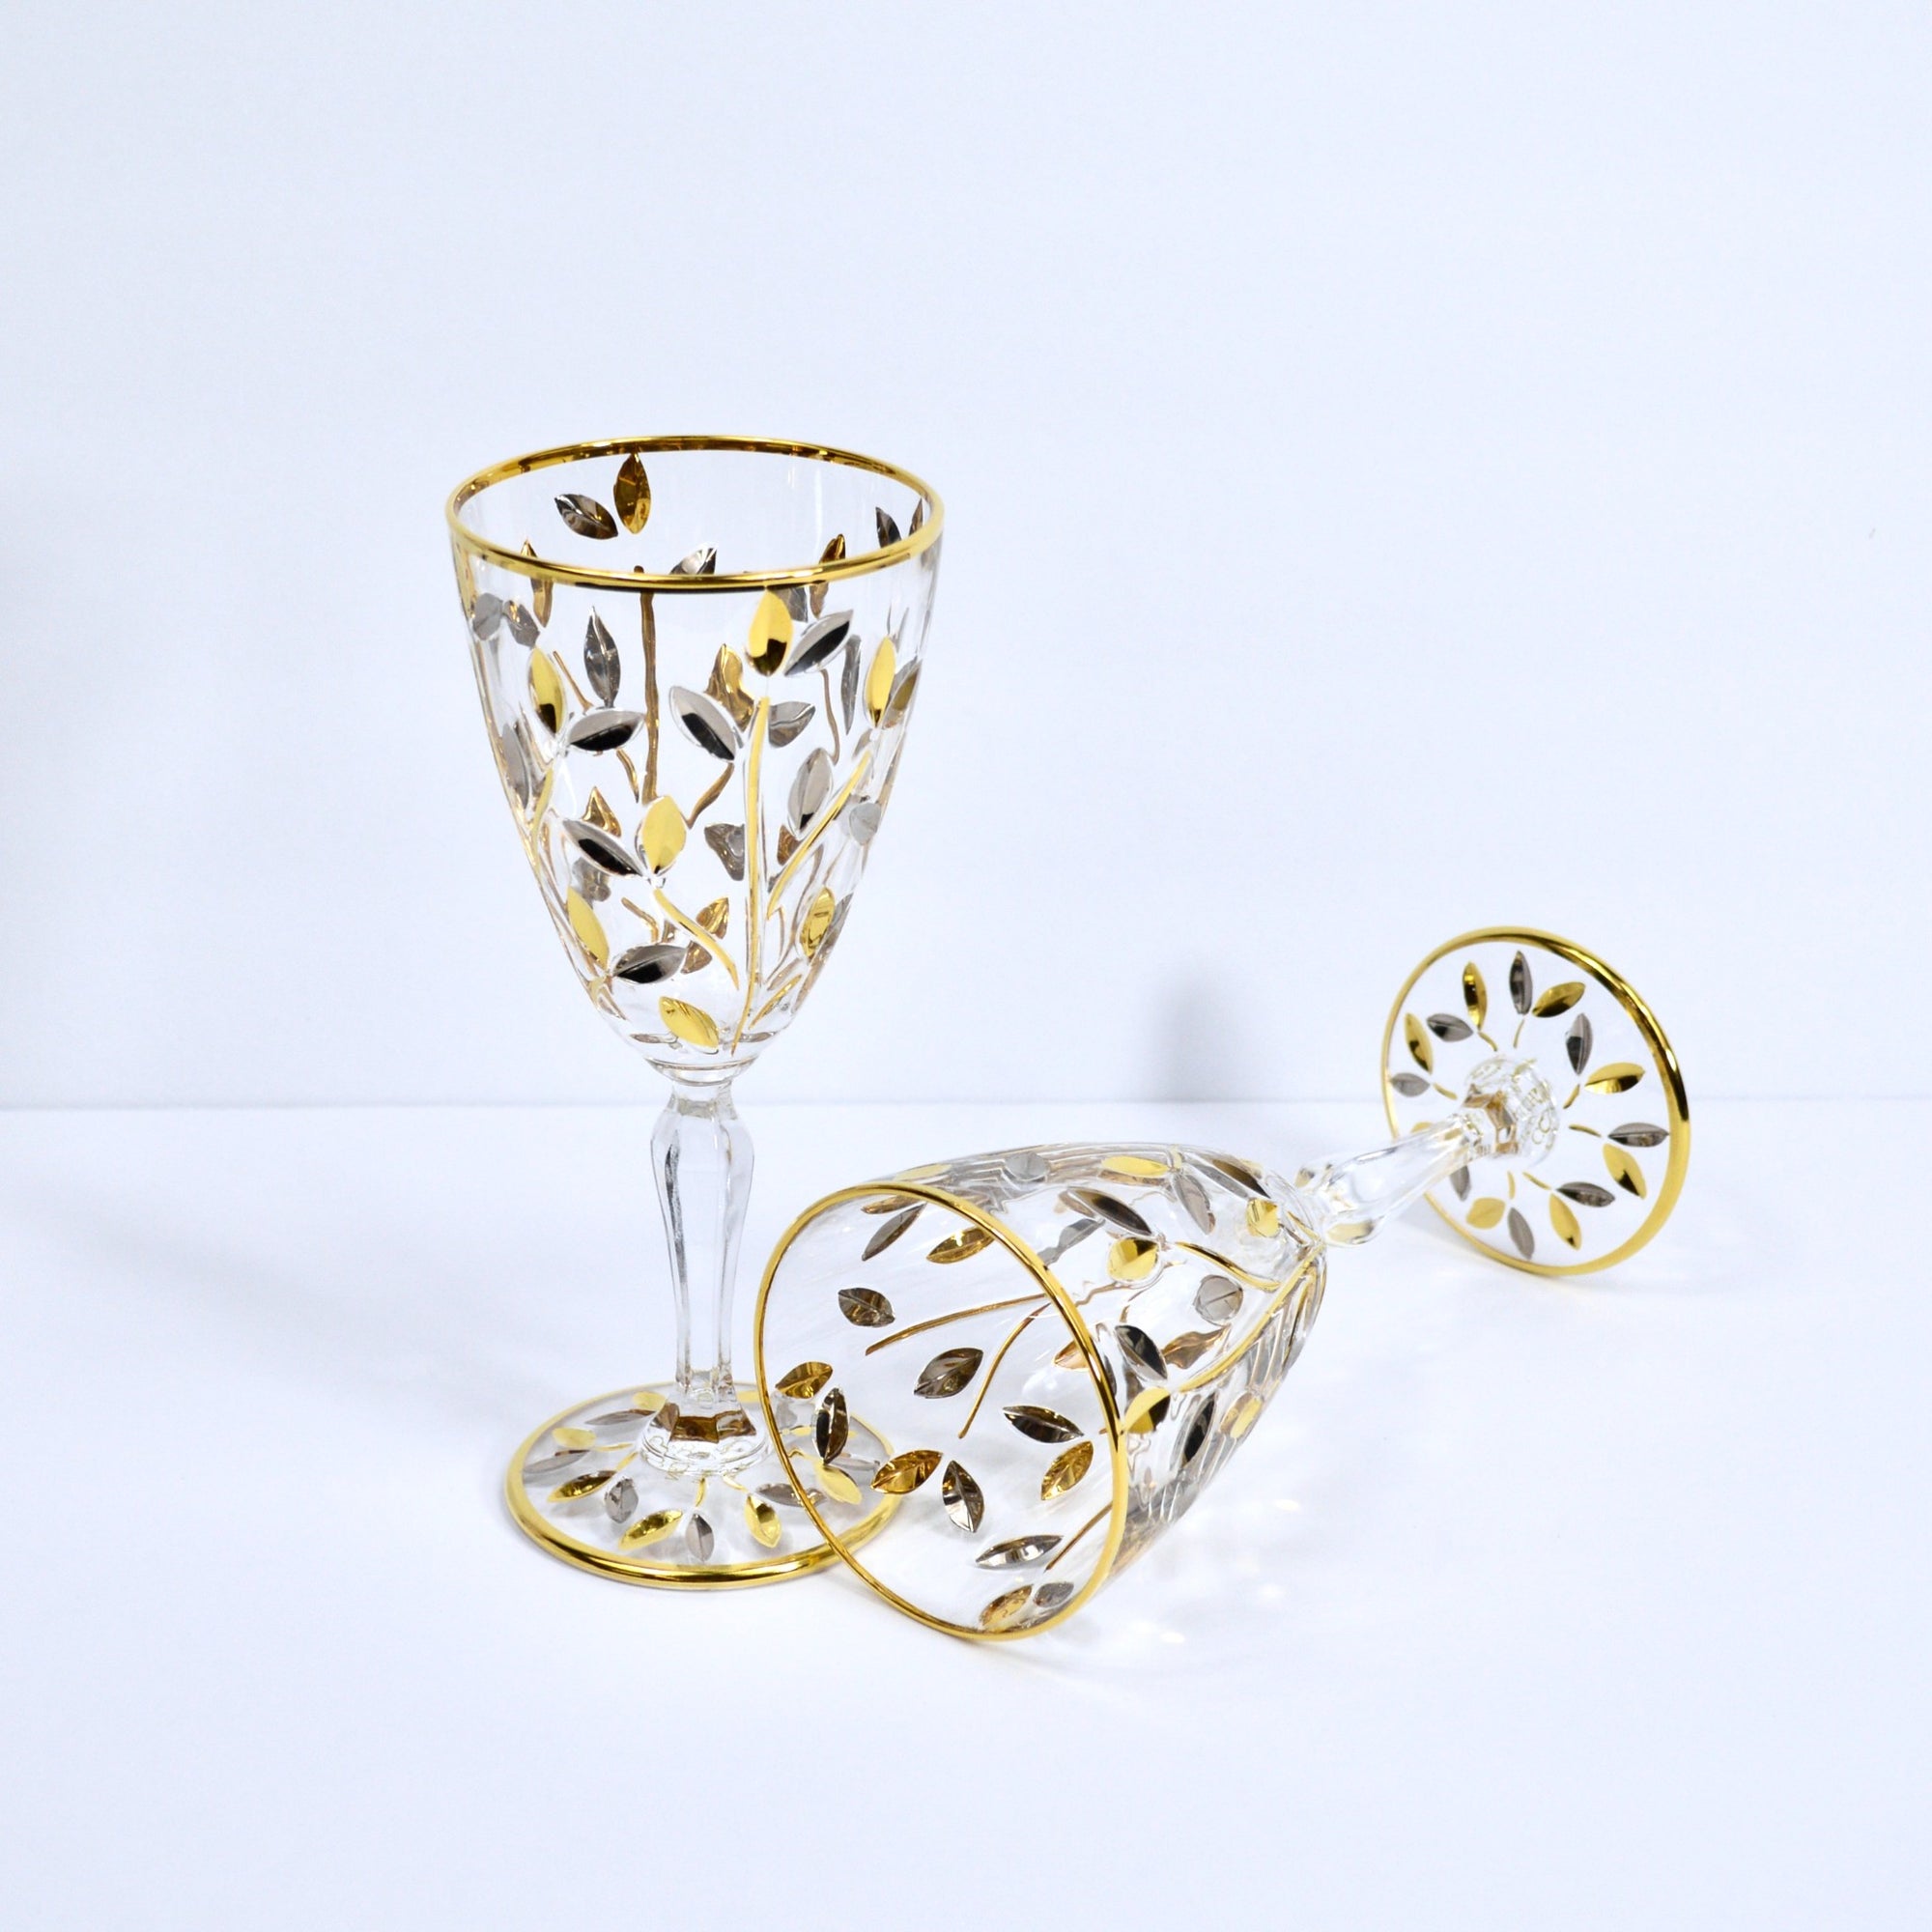 Flowervine Platinum and Gold Wine Glasses, Set of 2, - My Italian Decor